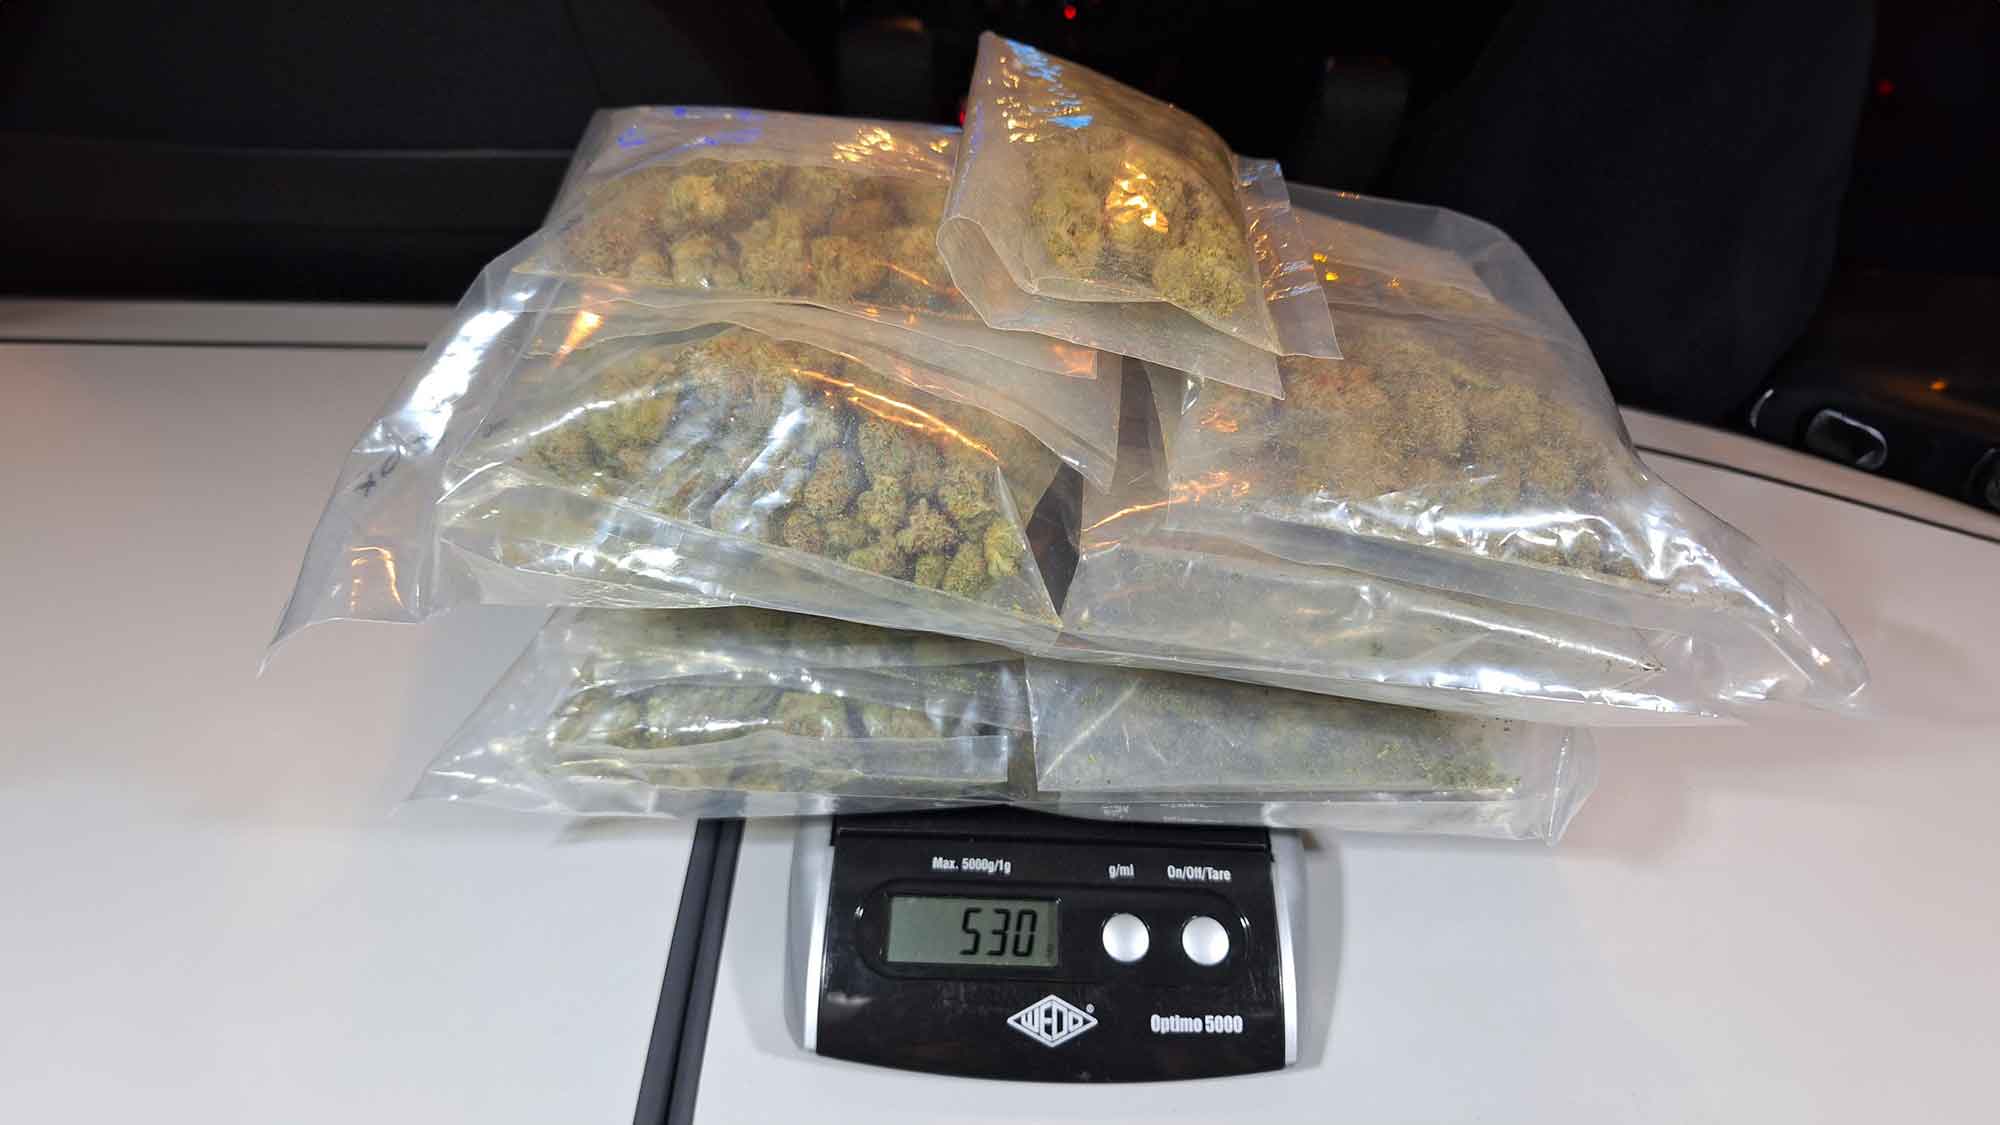 Hauptzollamt Potsdam: knapp 530 Gramm Cannabis im Gepäck